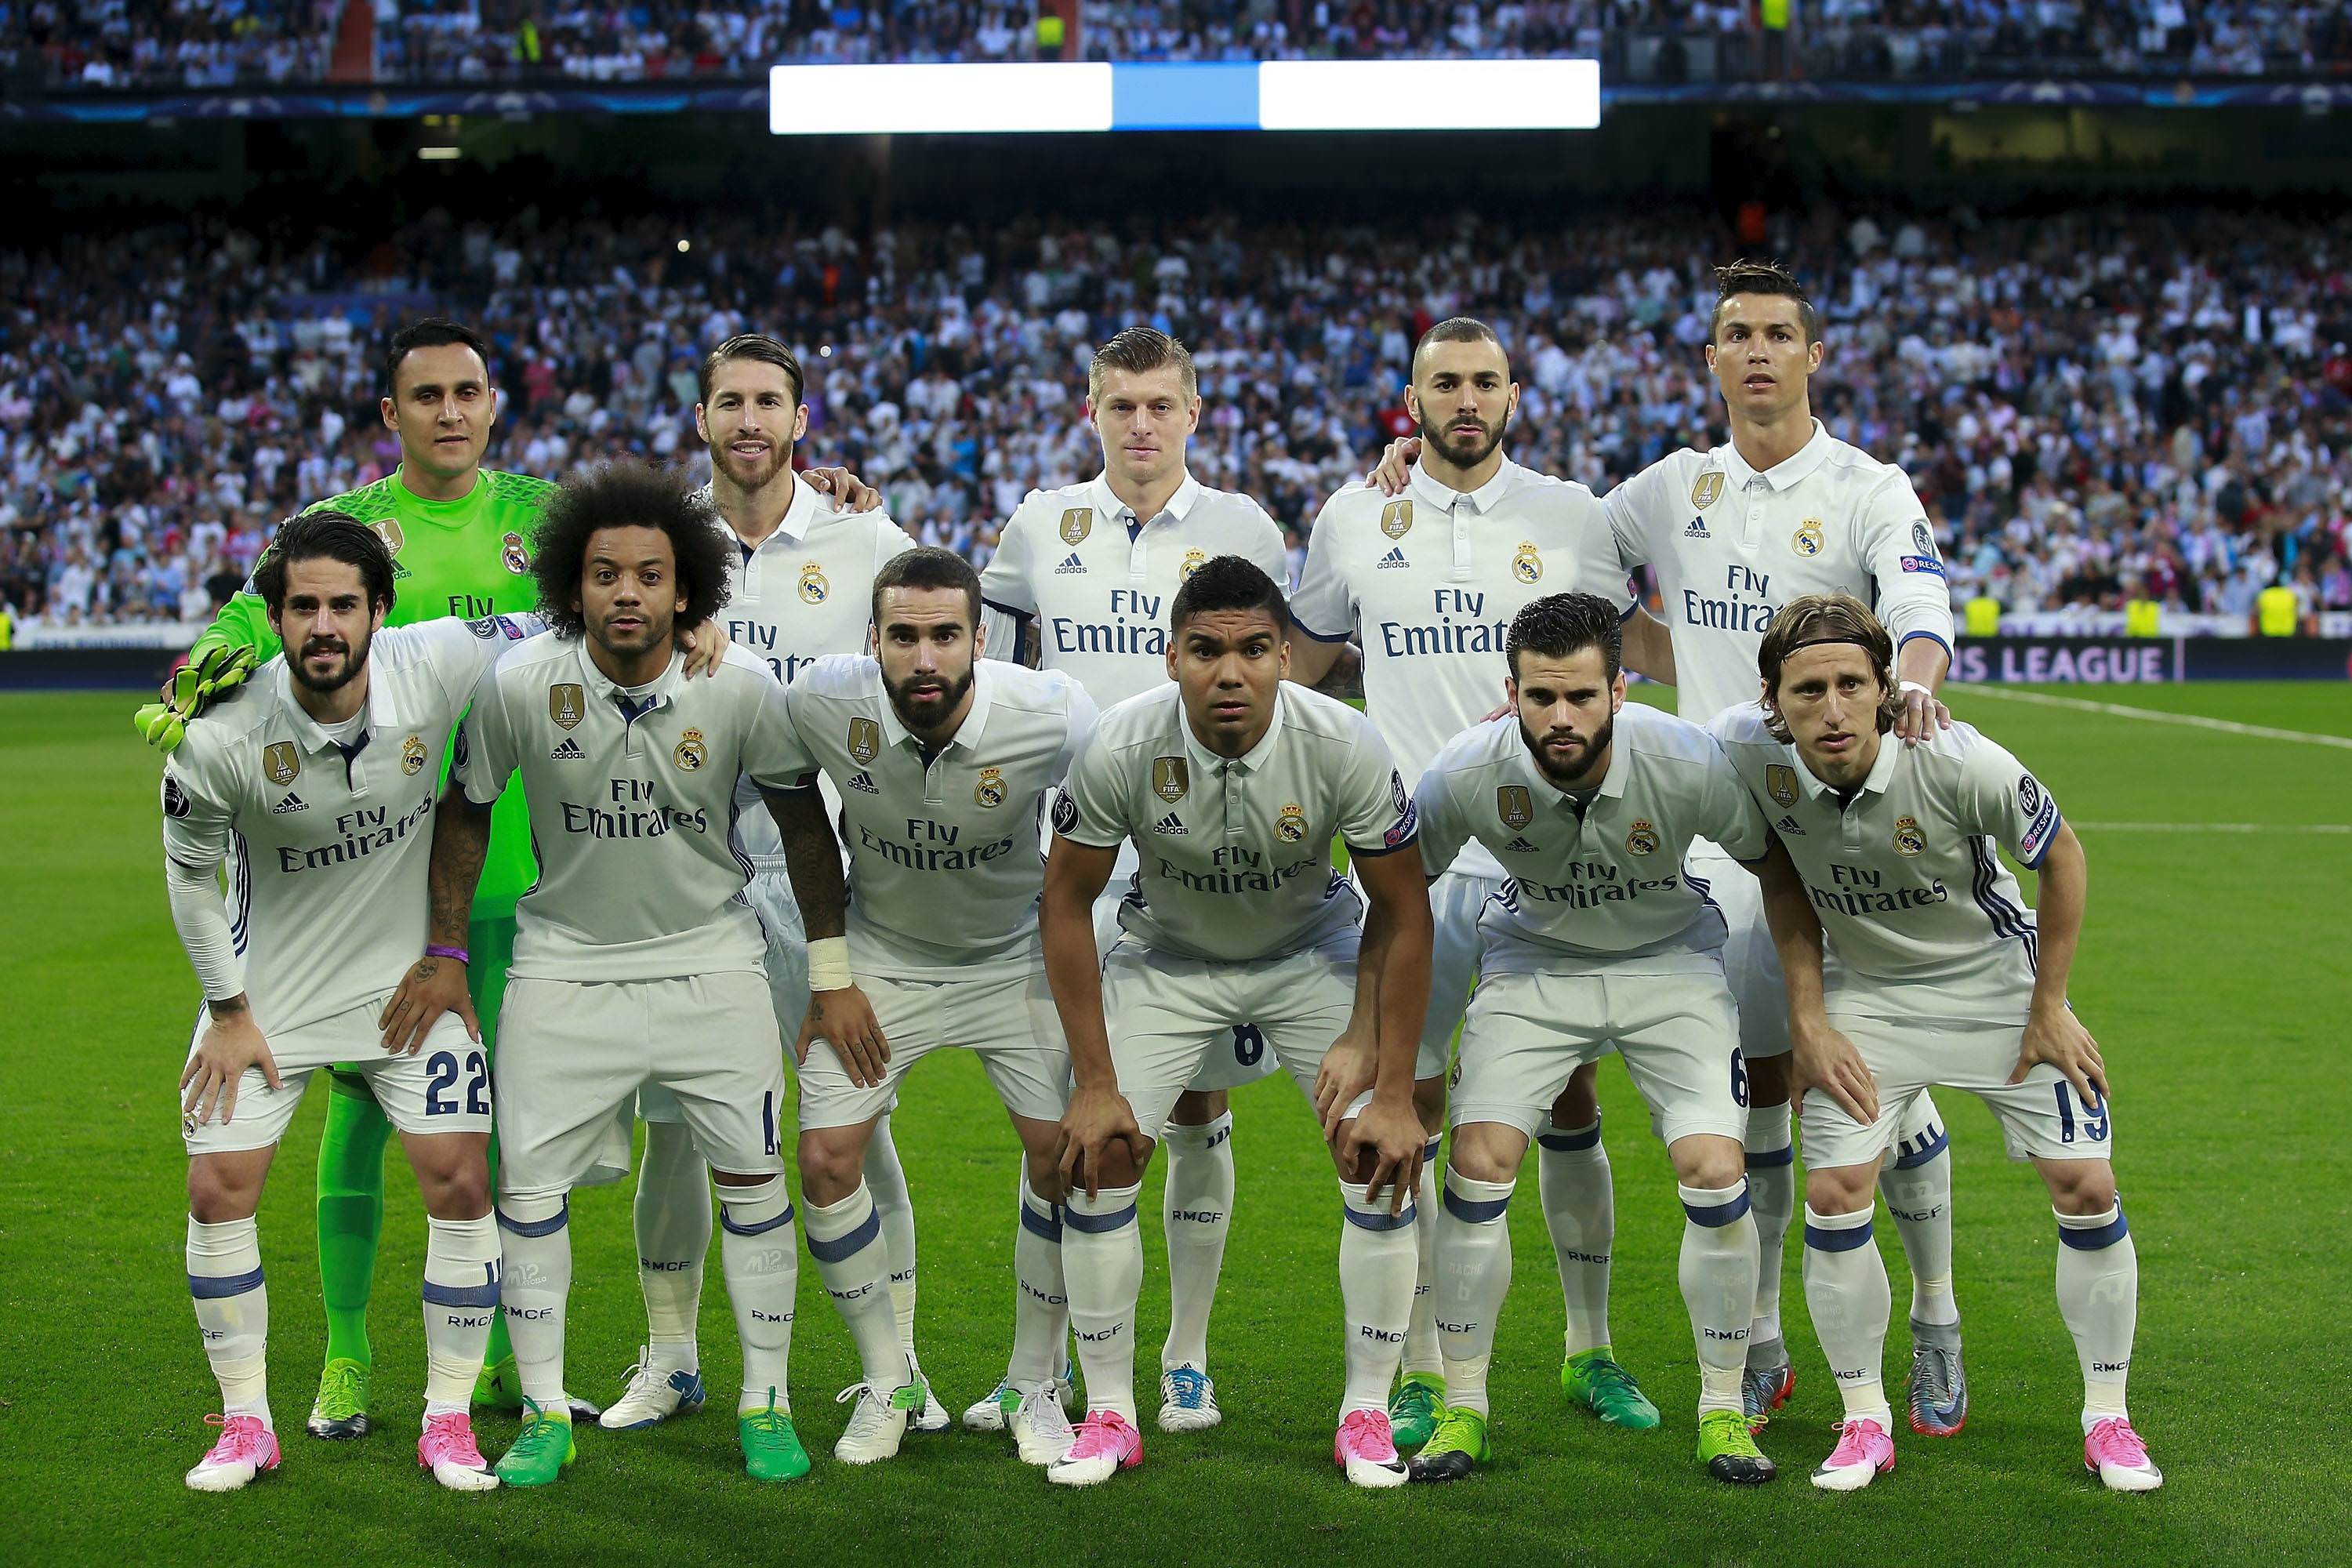 Real Madrid HD Wallpaper 2018